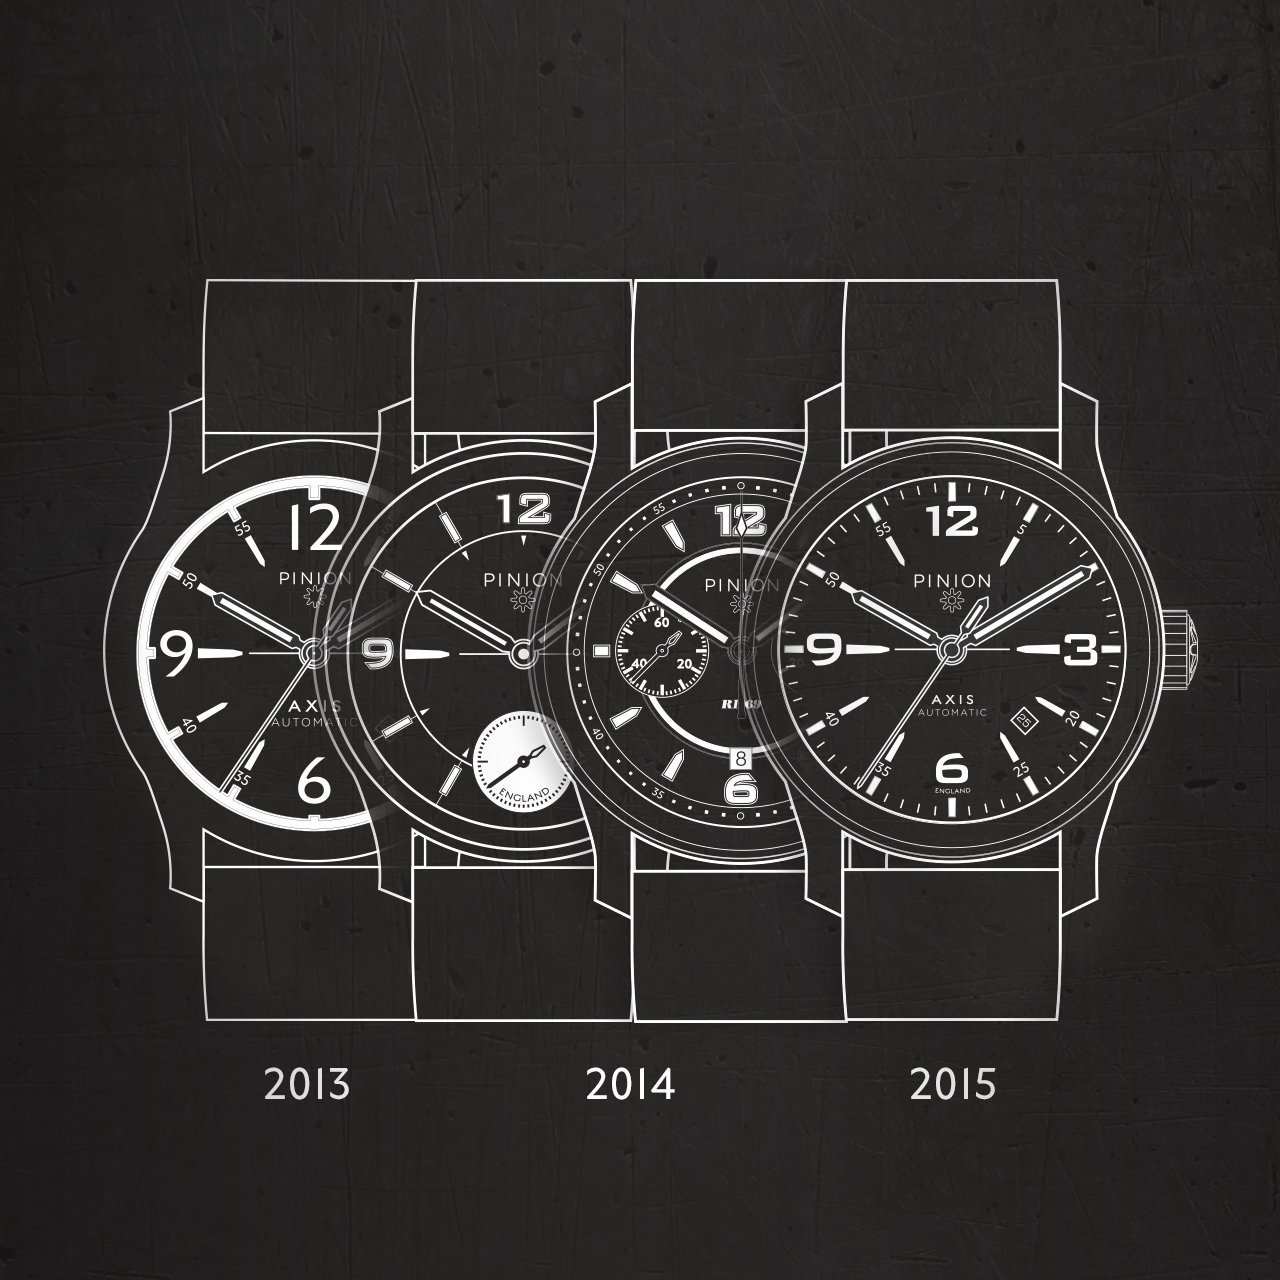 Pinion watch design continuity